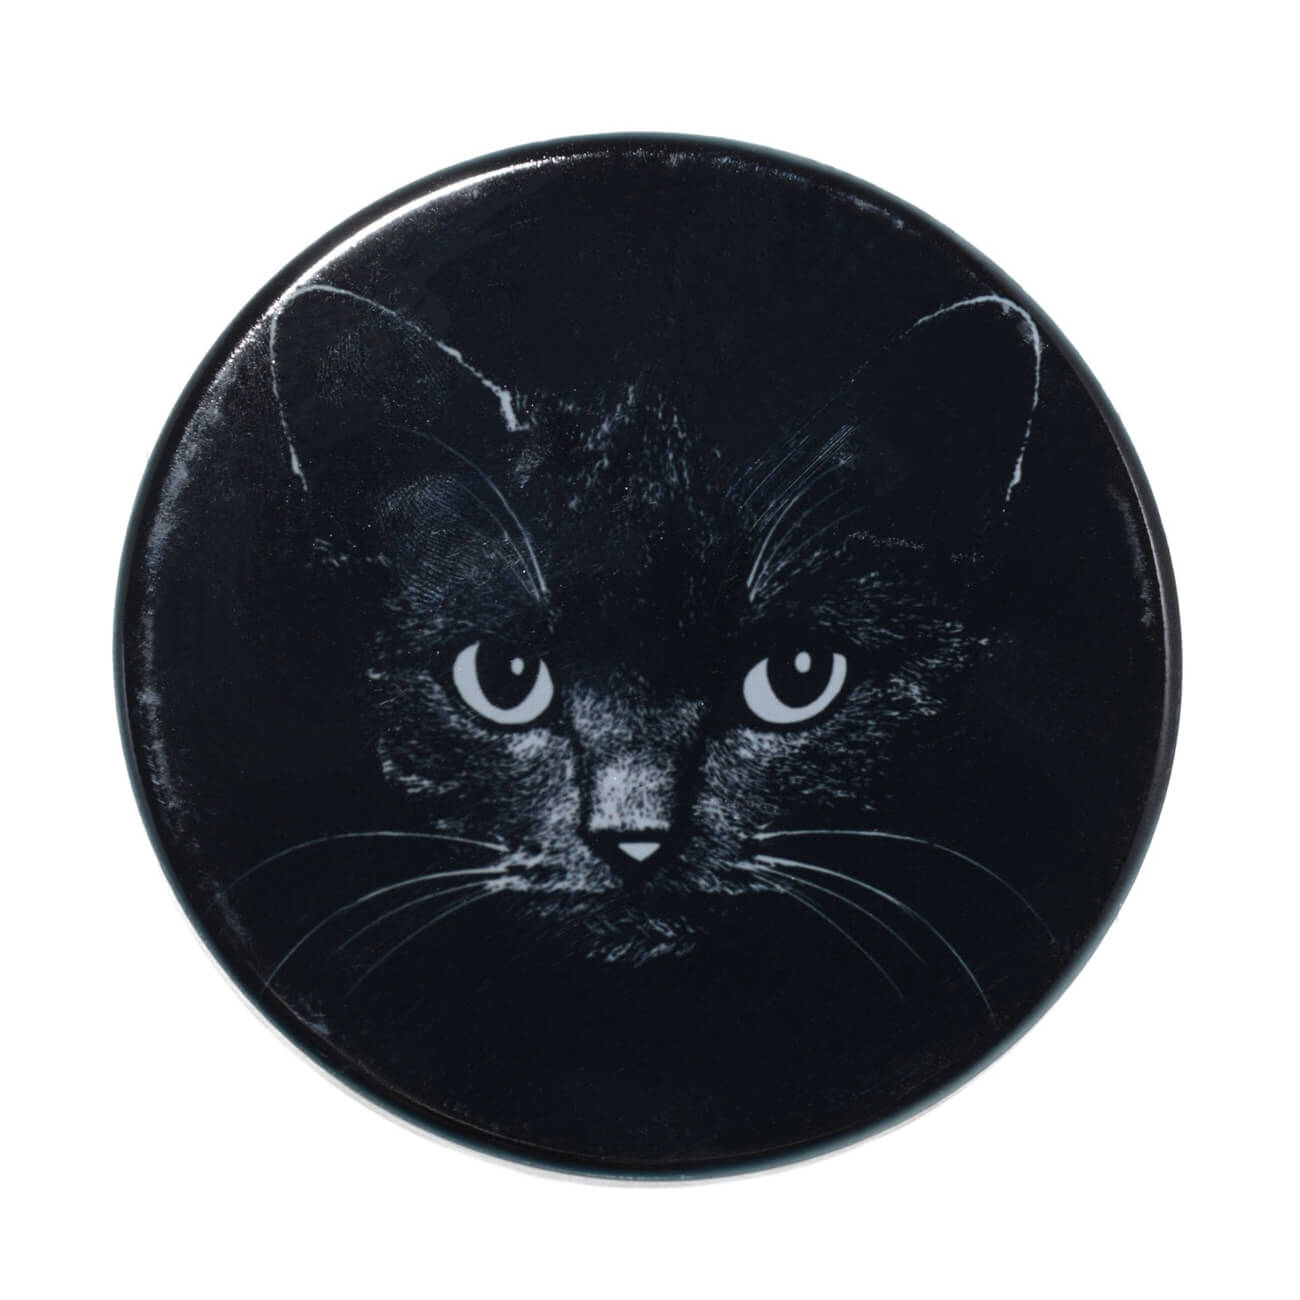 Mug stand, 11x11 cm, ceramic / cork, round, black, Night cat, Cat изображение № 1